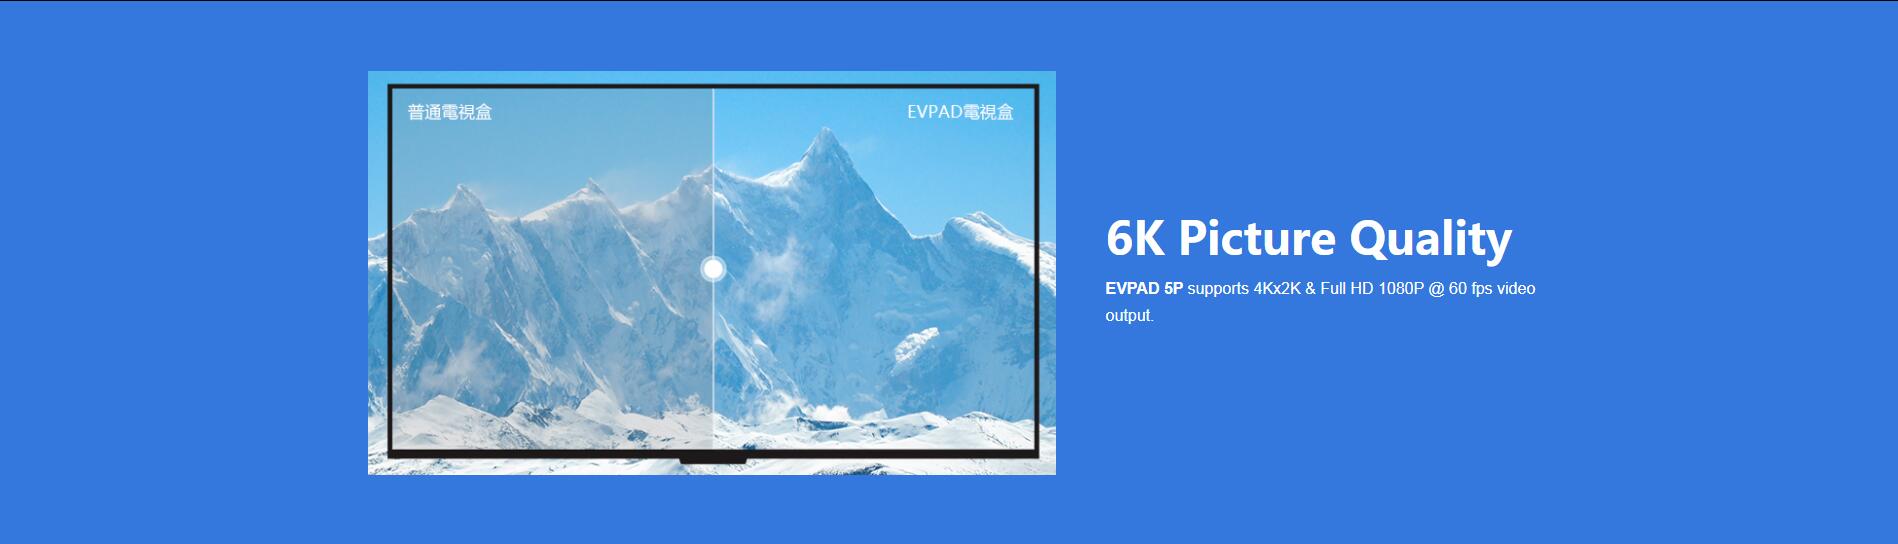 Телевизионная приставка EVPAD 5P — качество изображения 6K